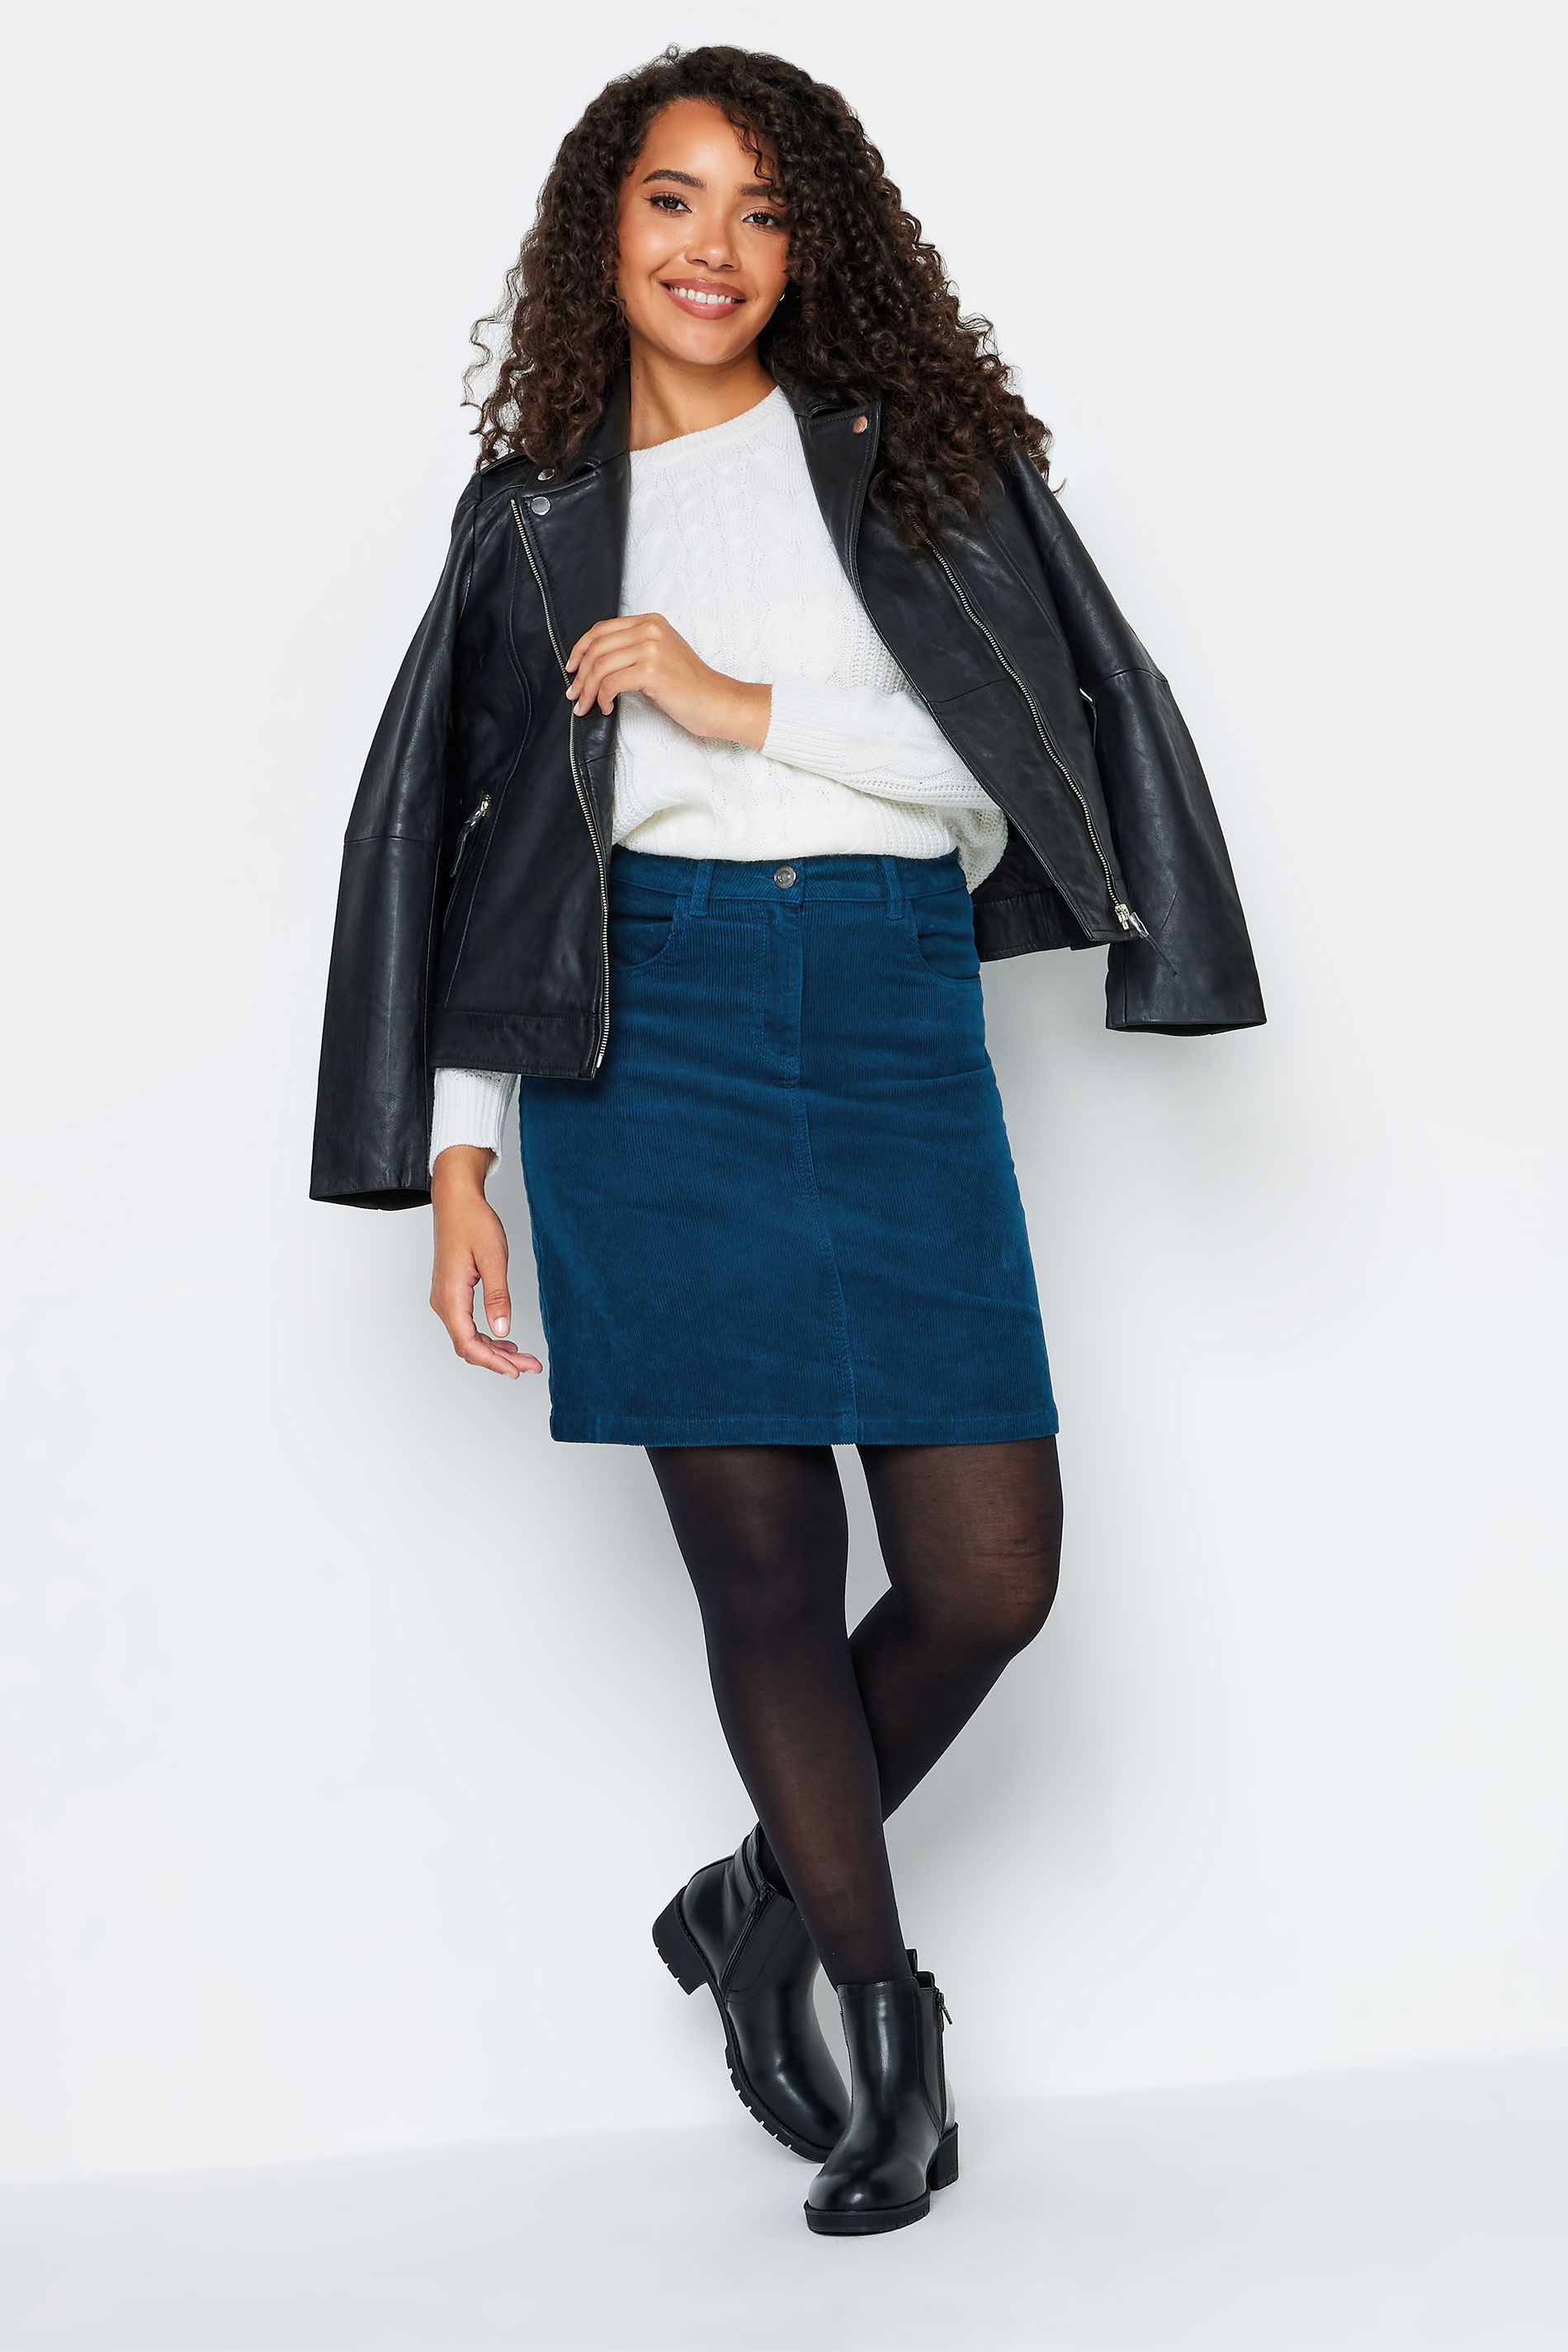 M&Co Teal Blue Cord A-Line Mini Skirt | M&Co 2